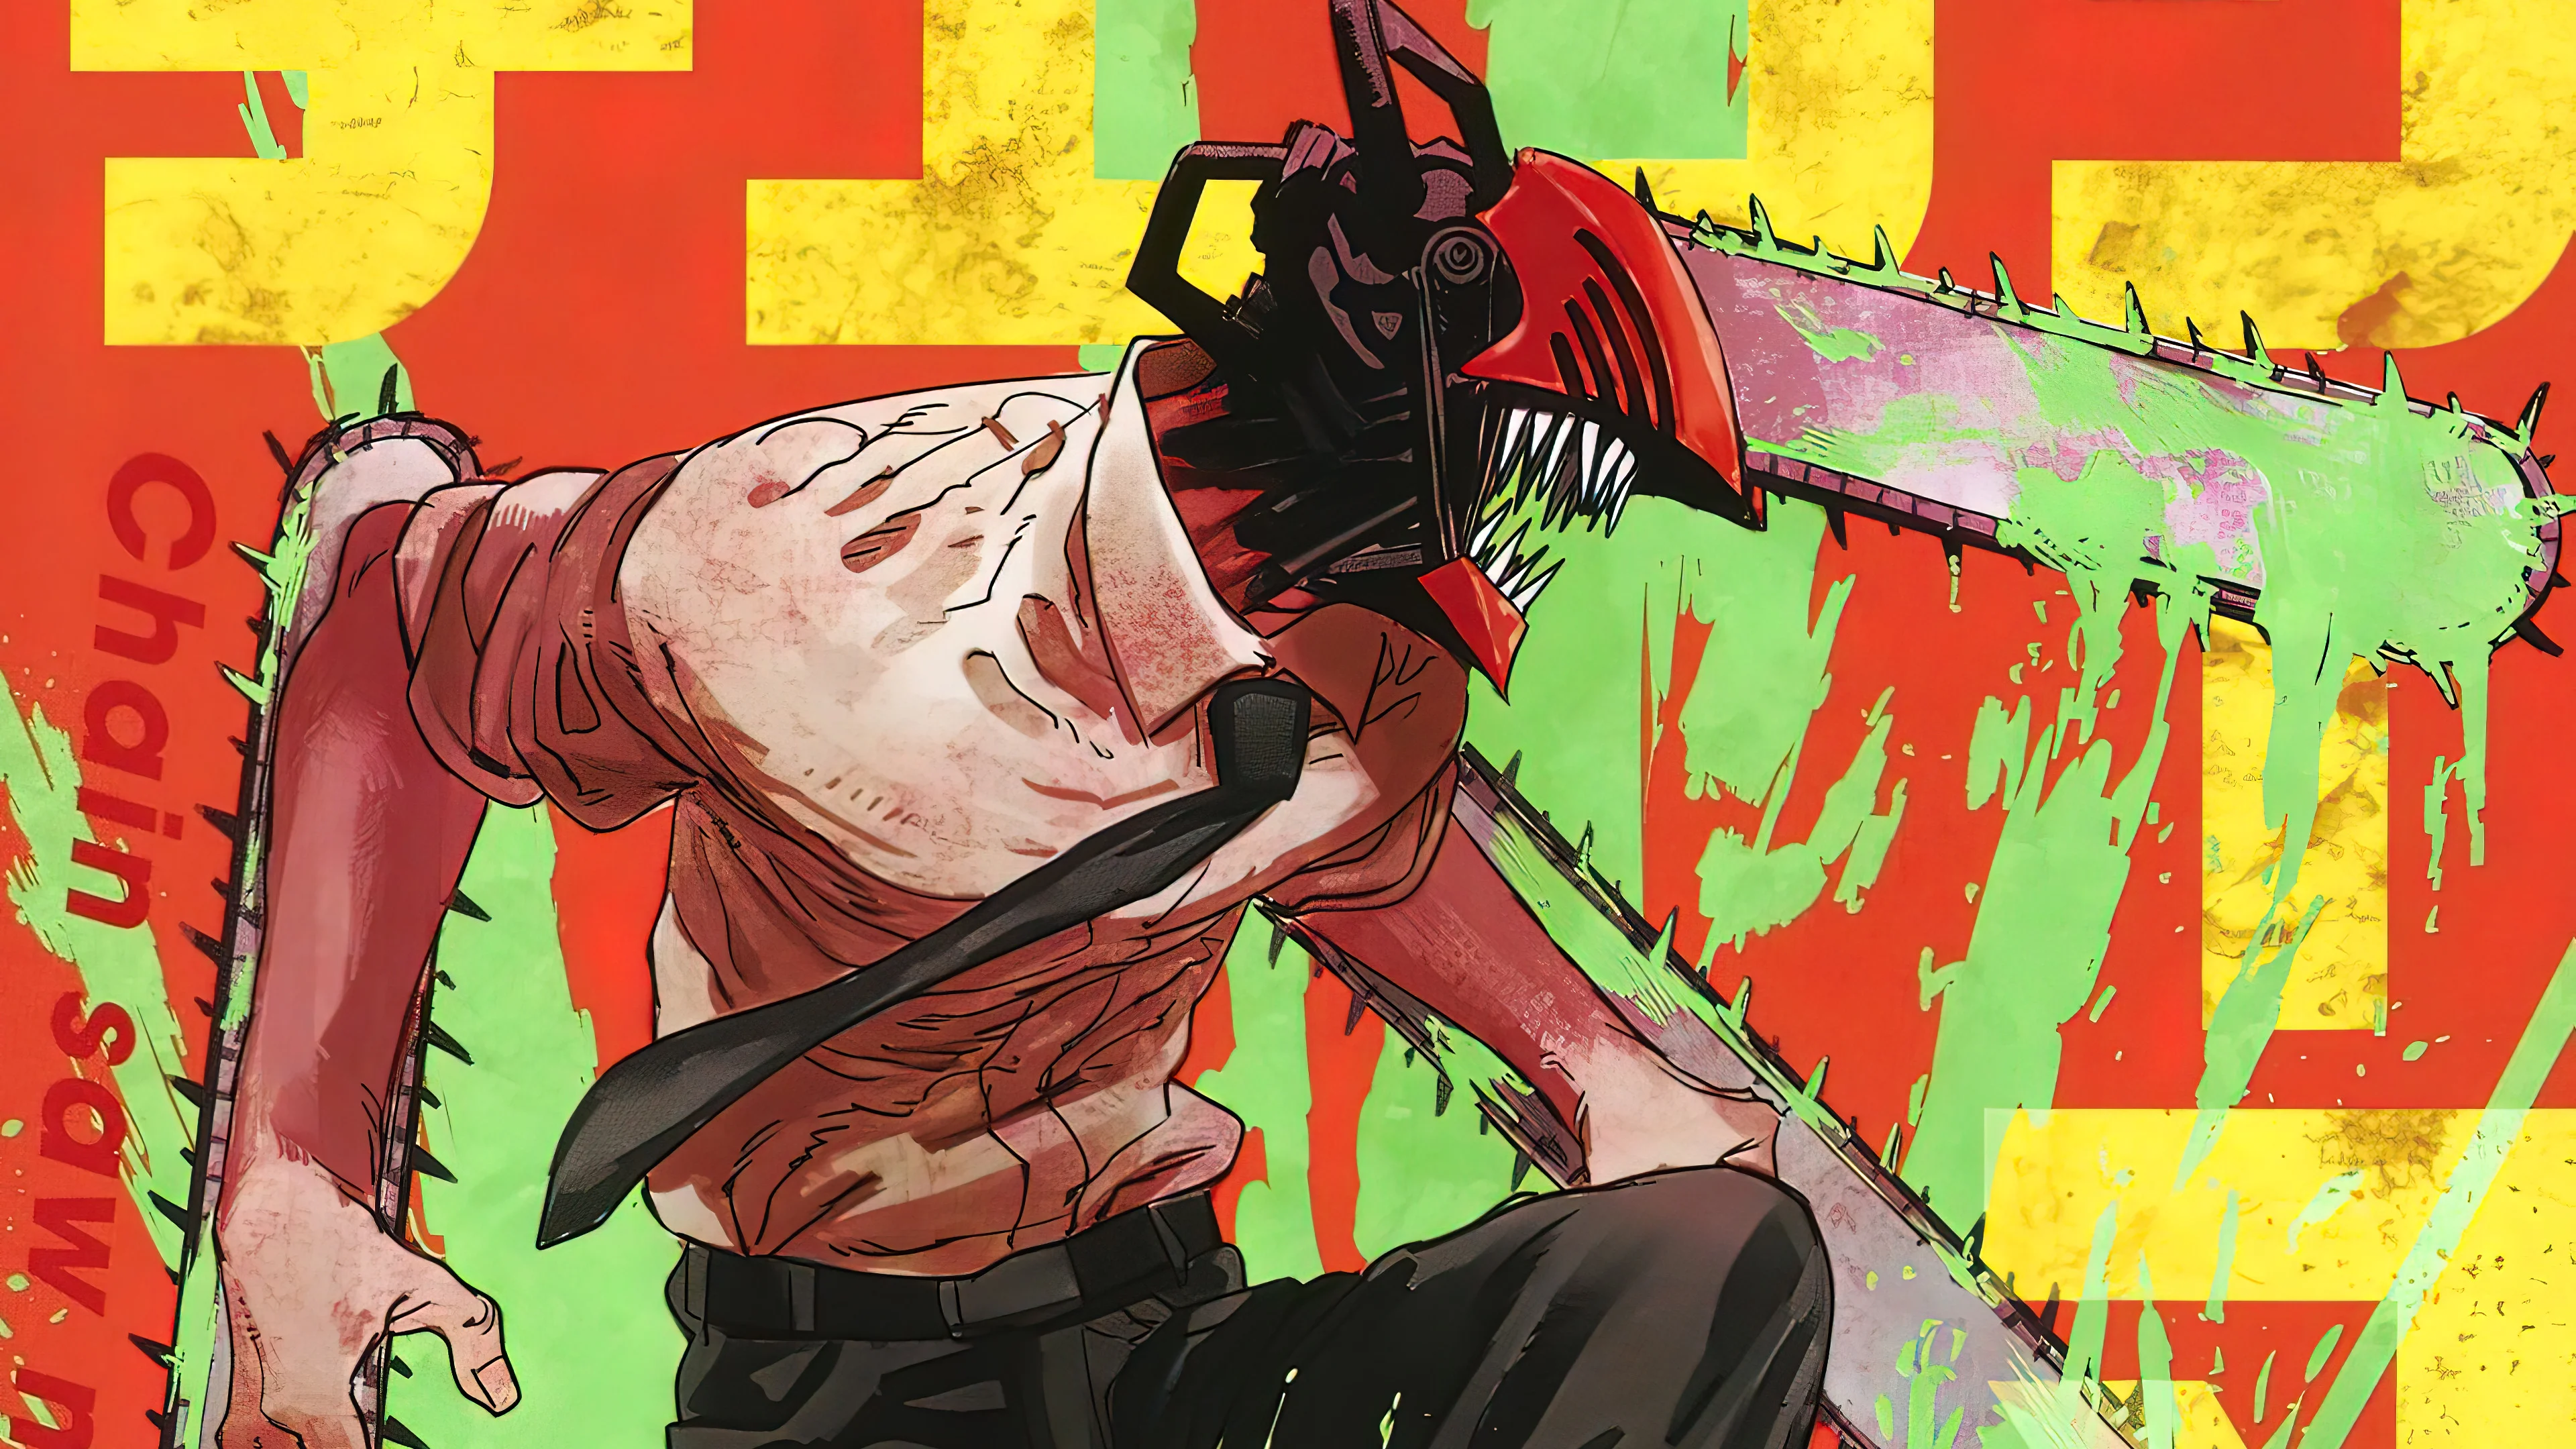 Chainsaw Man: Anime tendrá película y temporada 2, según rumores